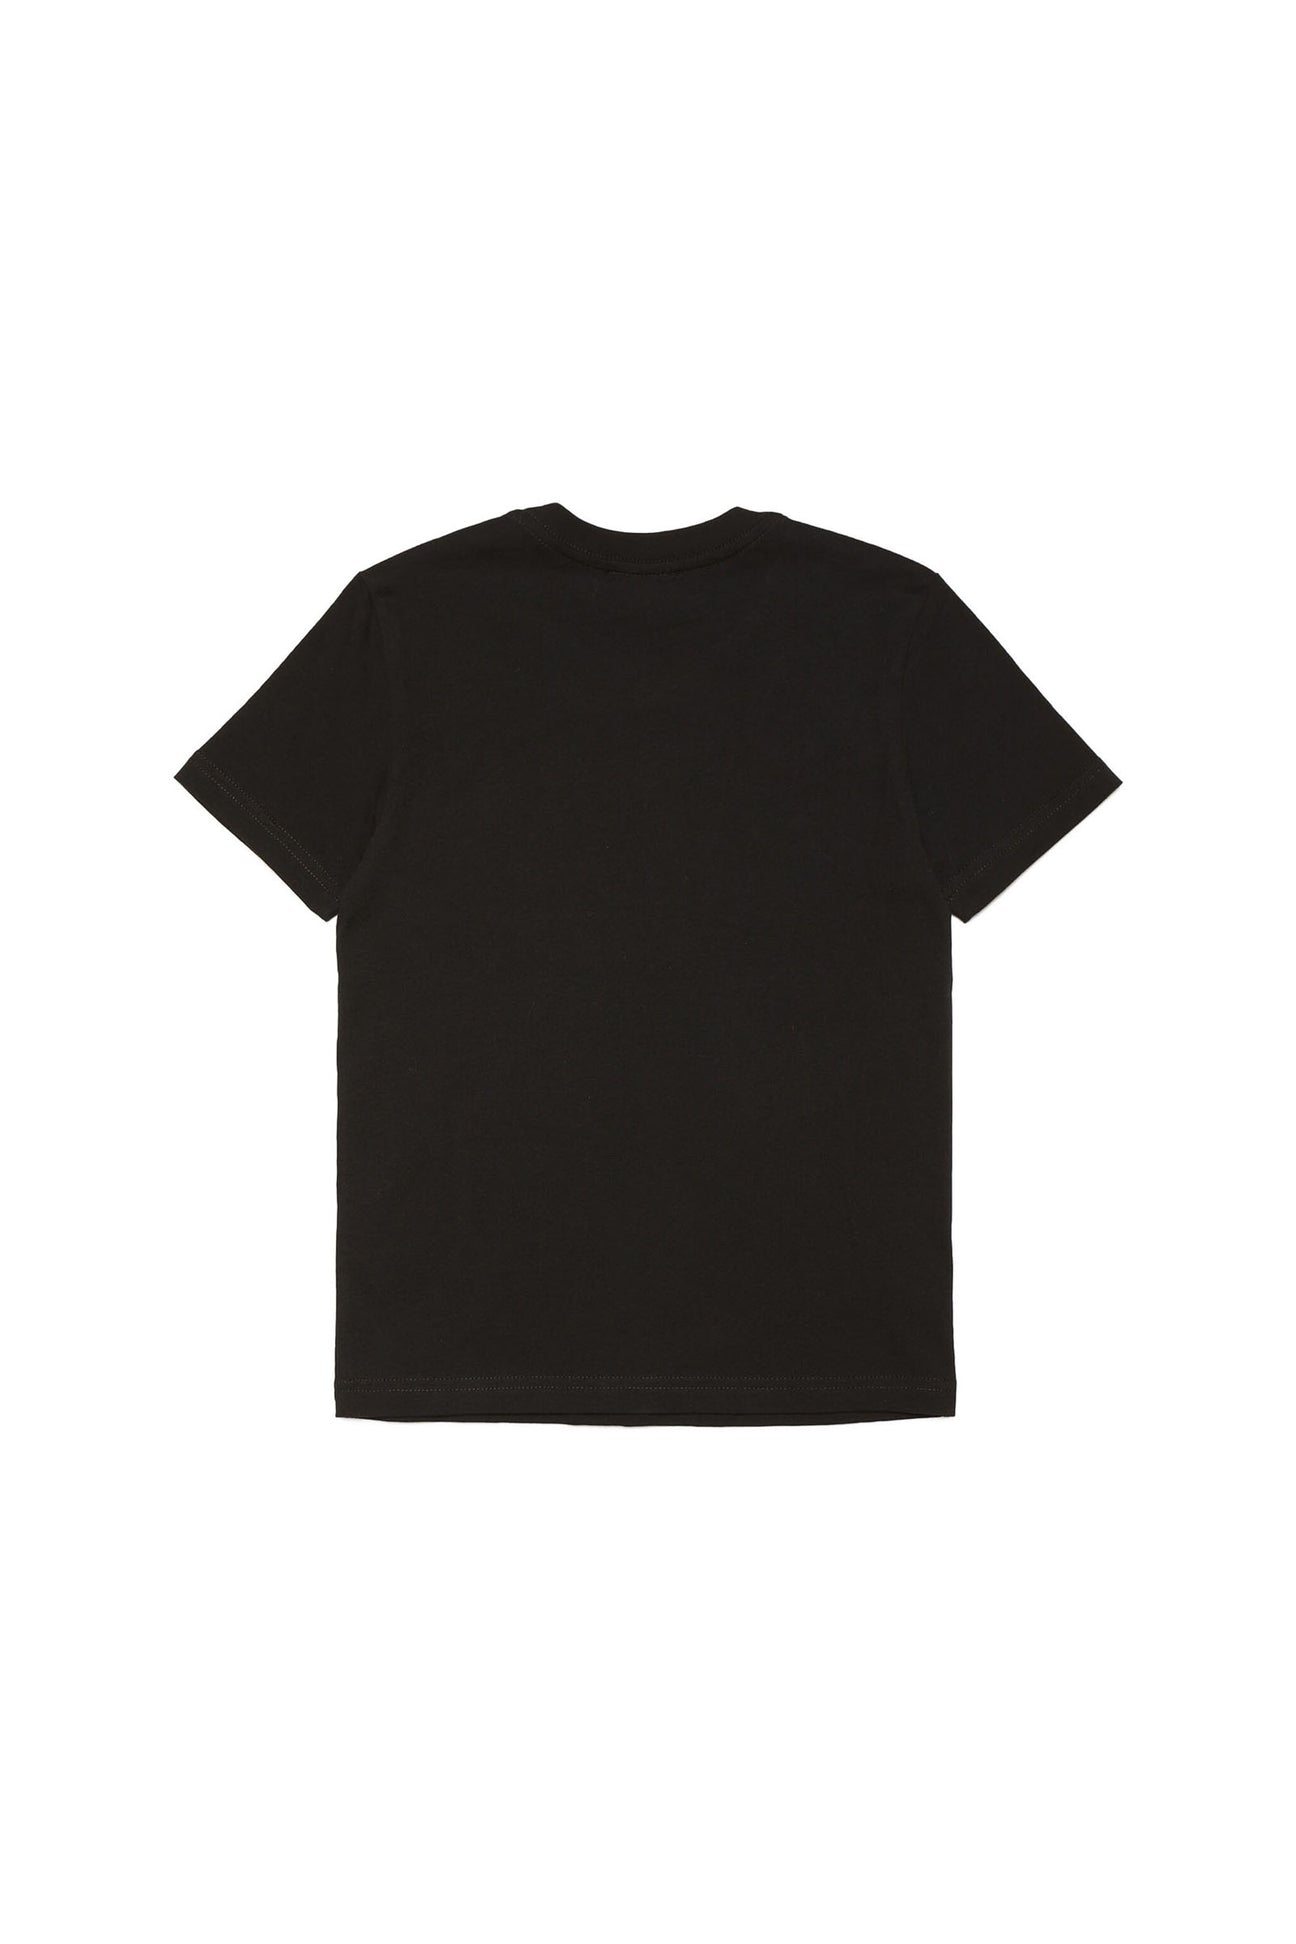 Black t-shirt with metallic effect Monkey print Black t-shirt with metallic effect Monkey print